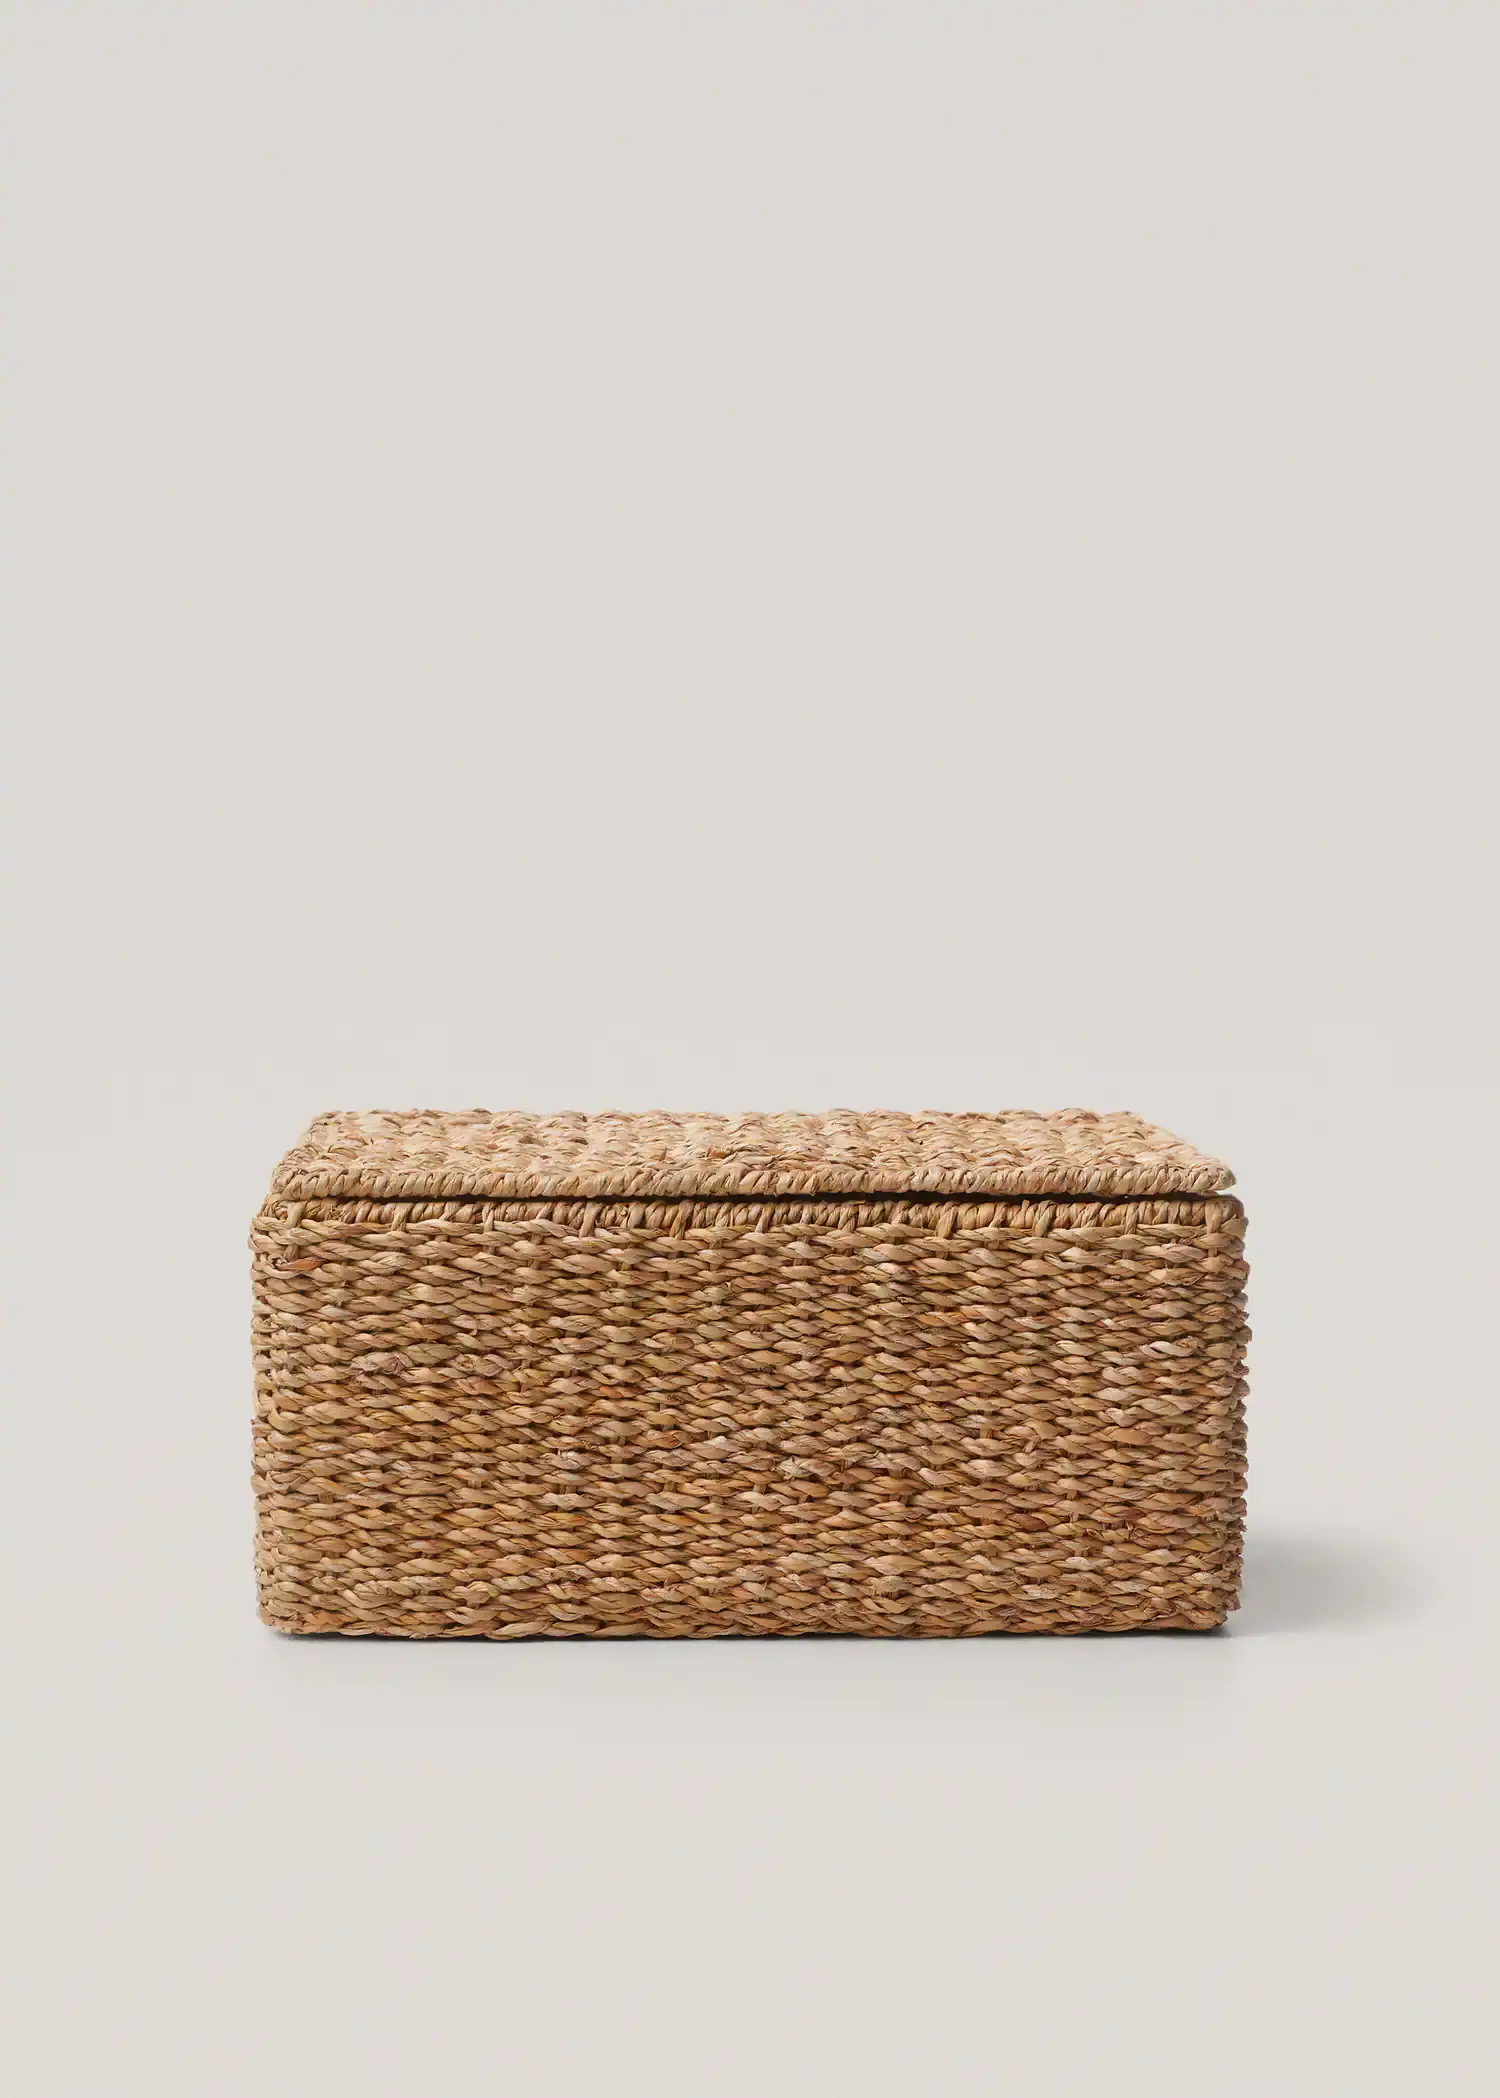 Mango Braided basket with handles 35x25cm. 1